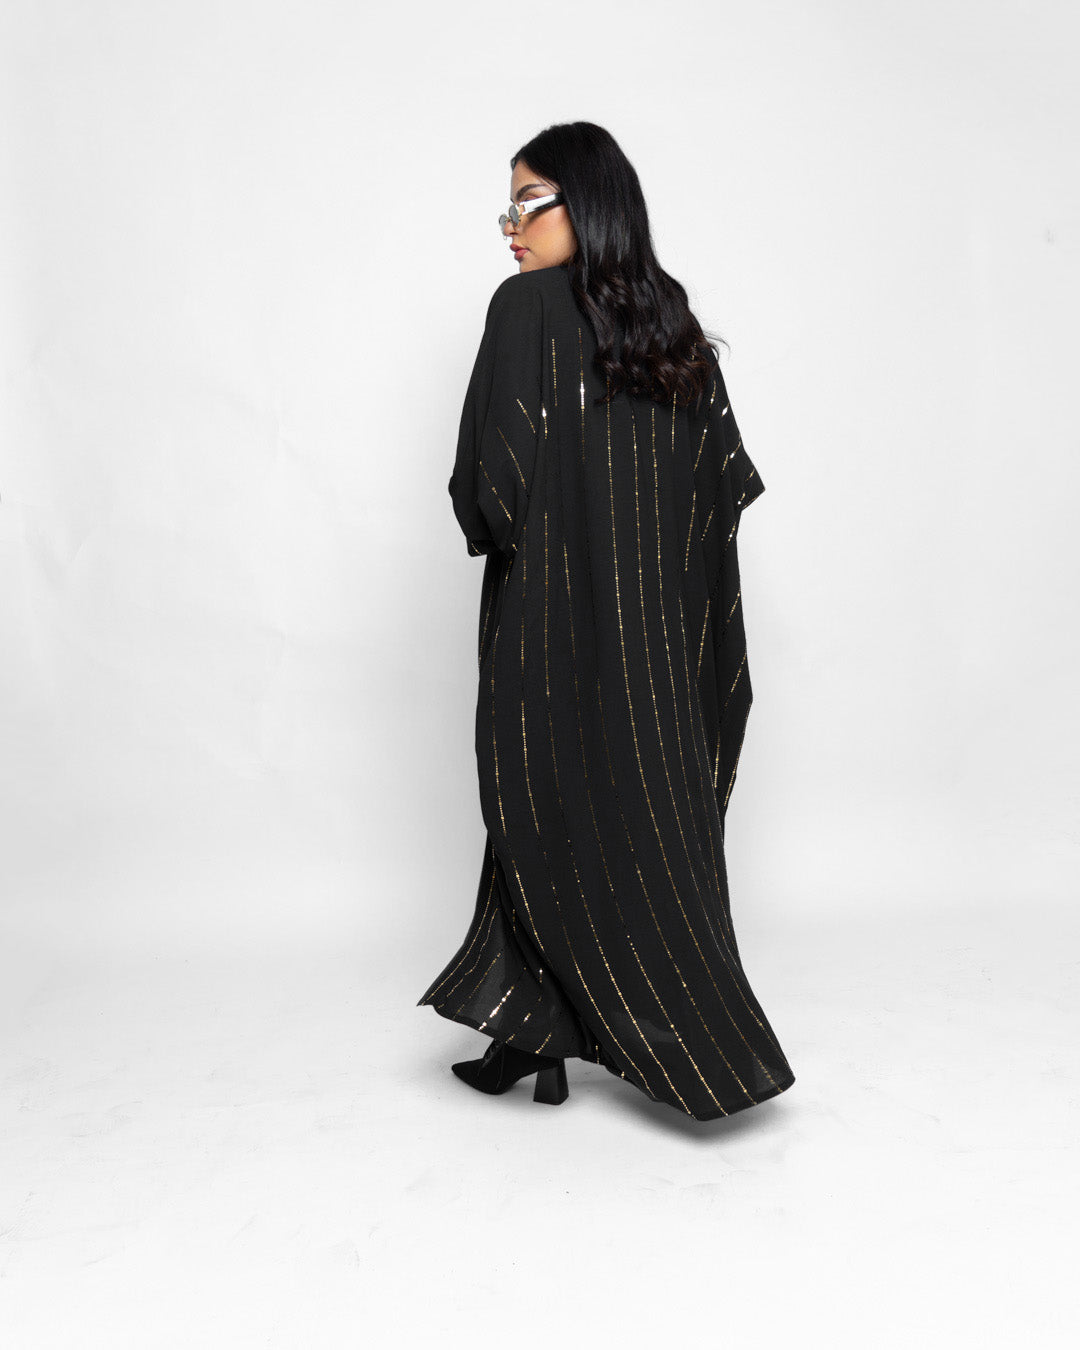 BL-0176 Abaya, Emirati model, black, with horizontal sequins